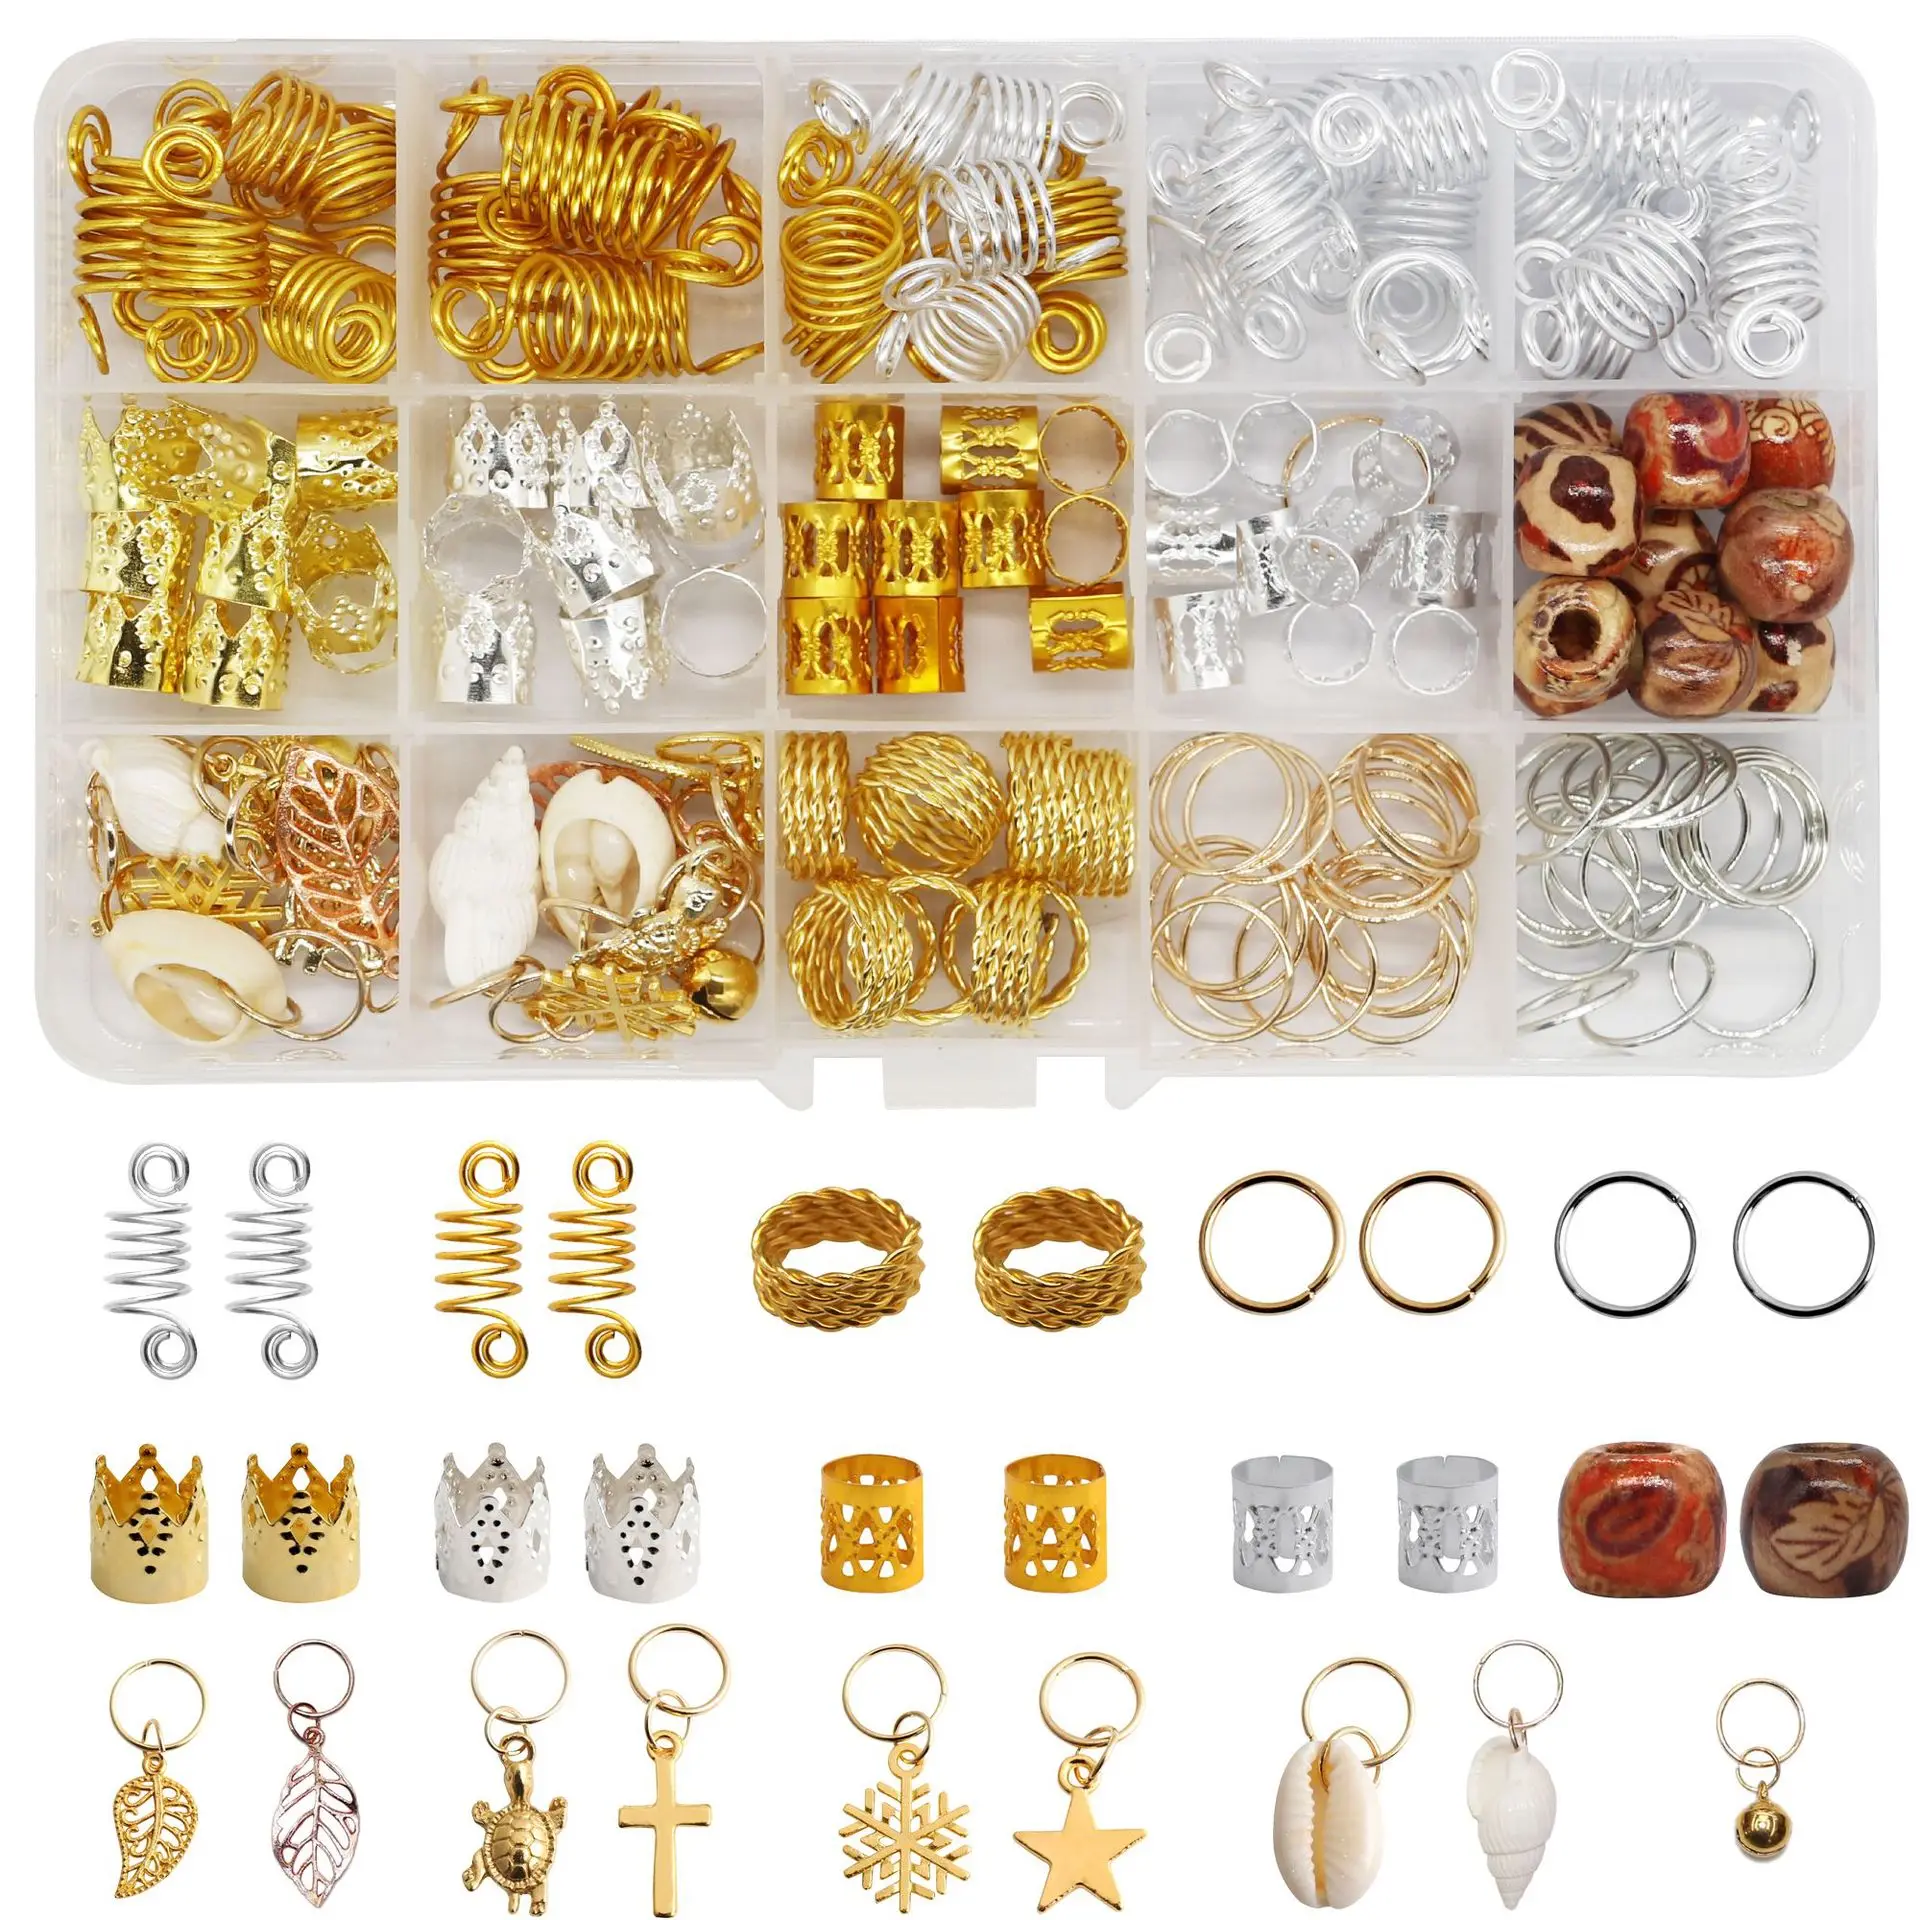 

158 pieces Dreadlocks Beads Metal Hair Braid Cuffs Rings Shell Charms Hair Coils Braiding Hair Jewelry, Gold and sliver